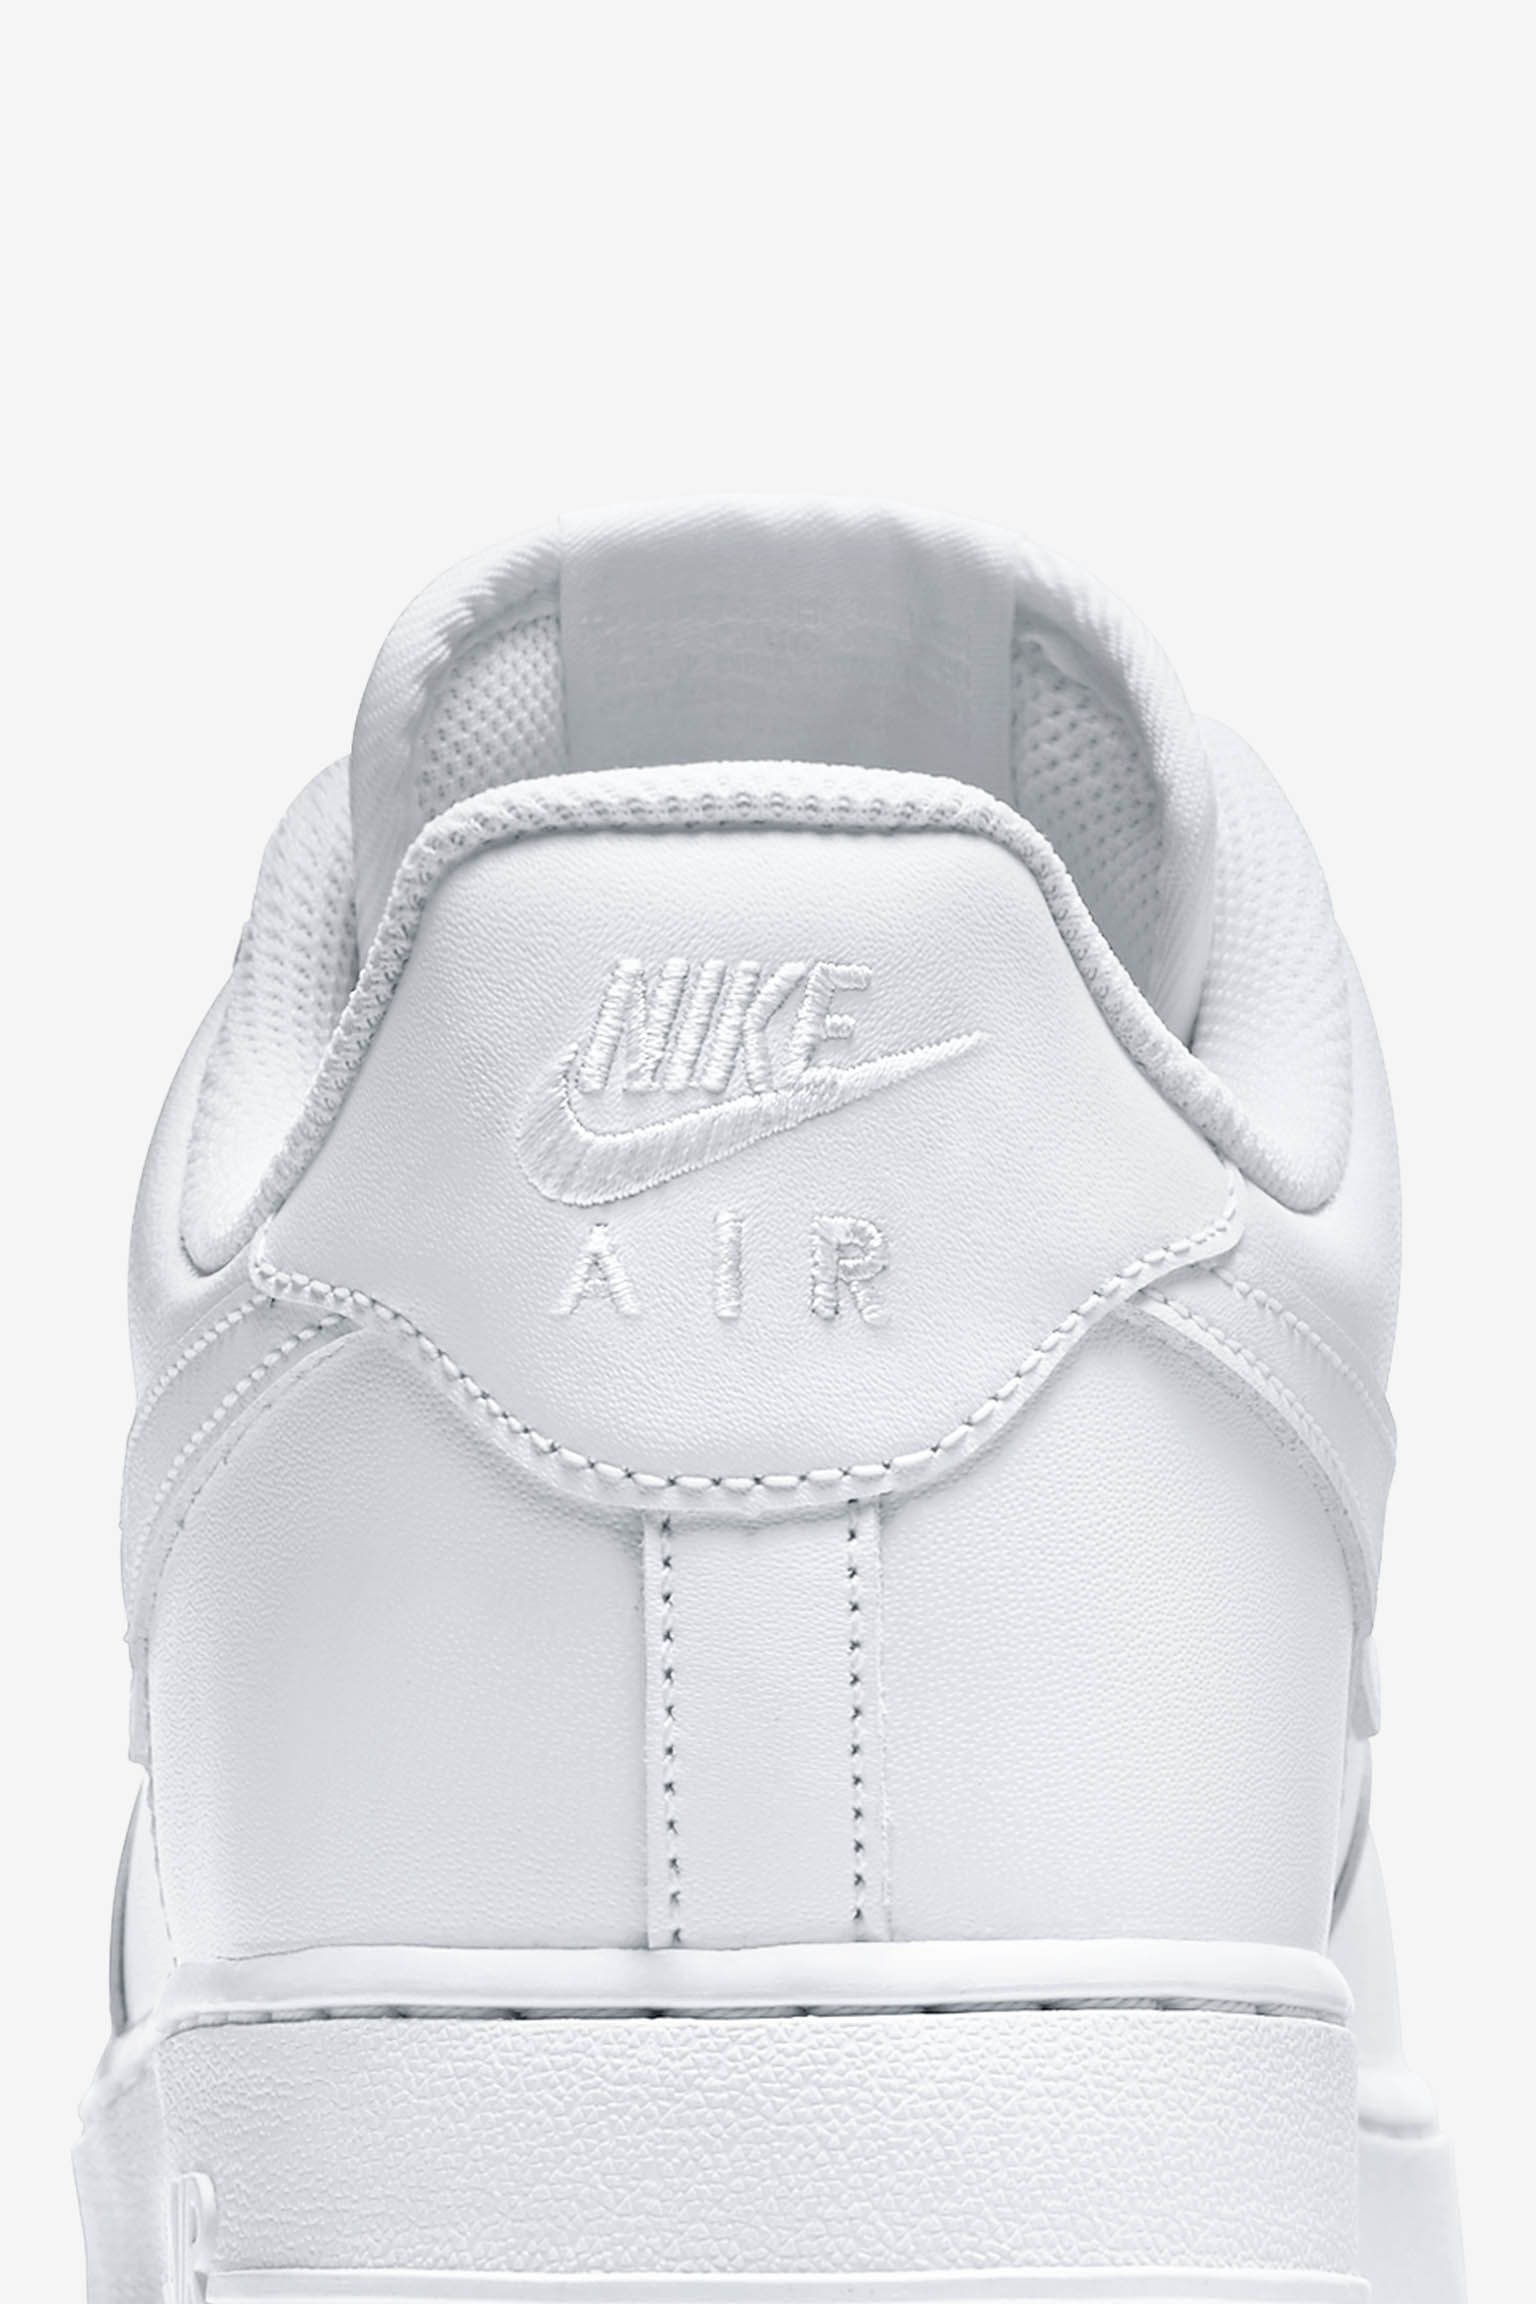 Nike Air Force 1 Low 'Triple White'. Nike SNKRS